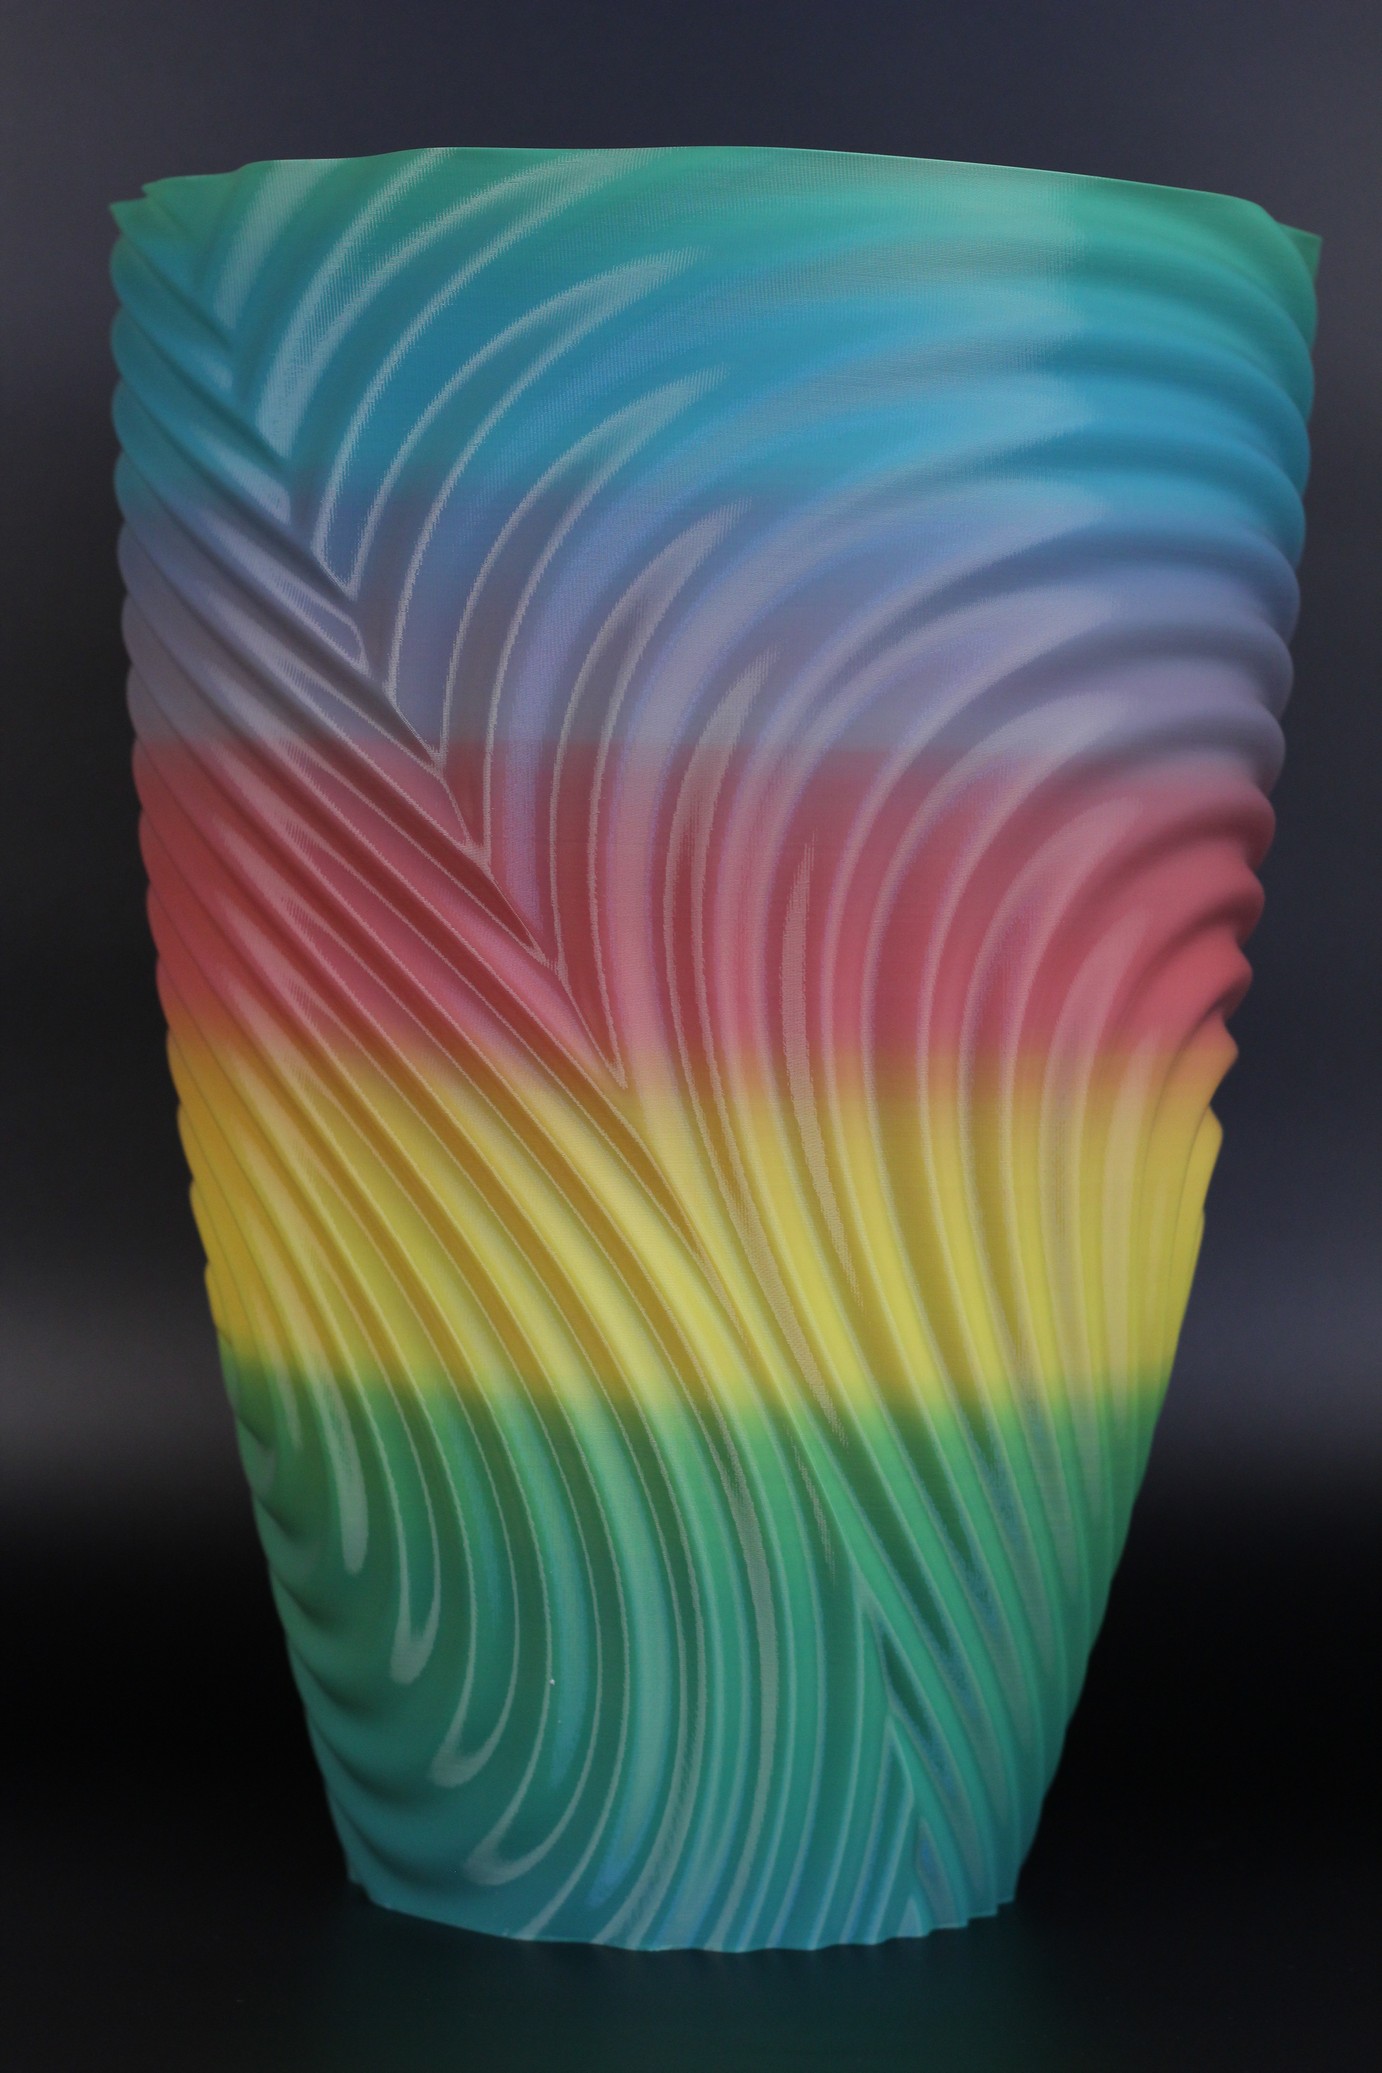 Twisted Ripple Vase printed on Anycubic Kobra Max 6 | Anycubic Kobra Max Review: Big Printer For People with Big Dreams